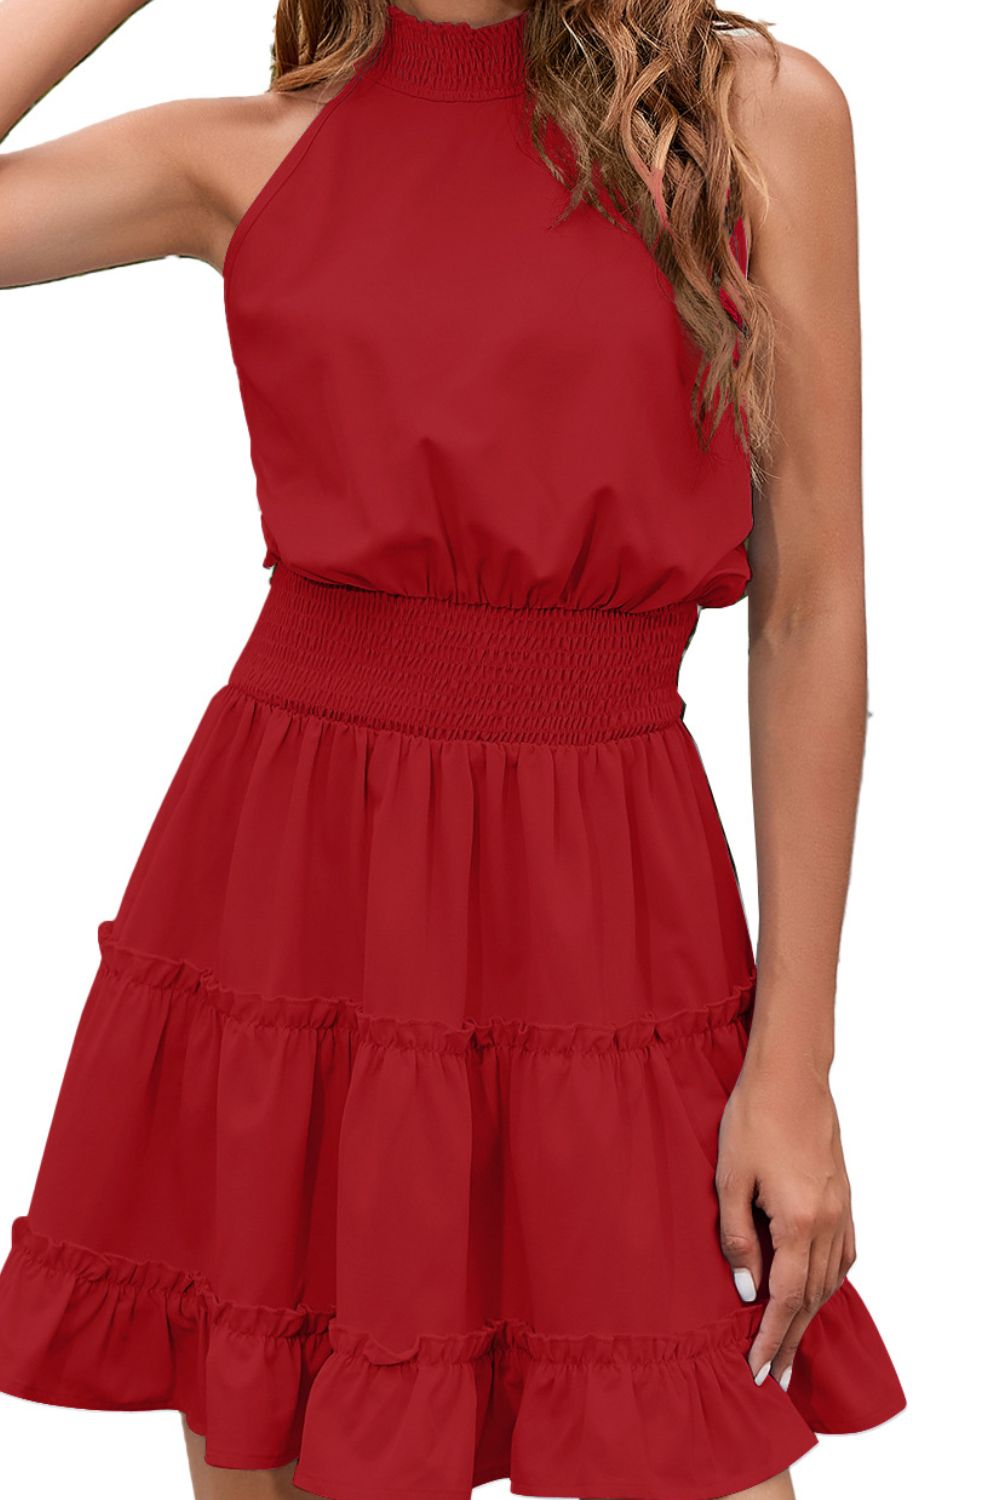 Hallie Frill Trim Smocked Waist Grecian Neck Sleeveless Dress- 1 size M RED left! FINAL SALE!